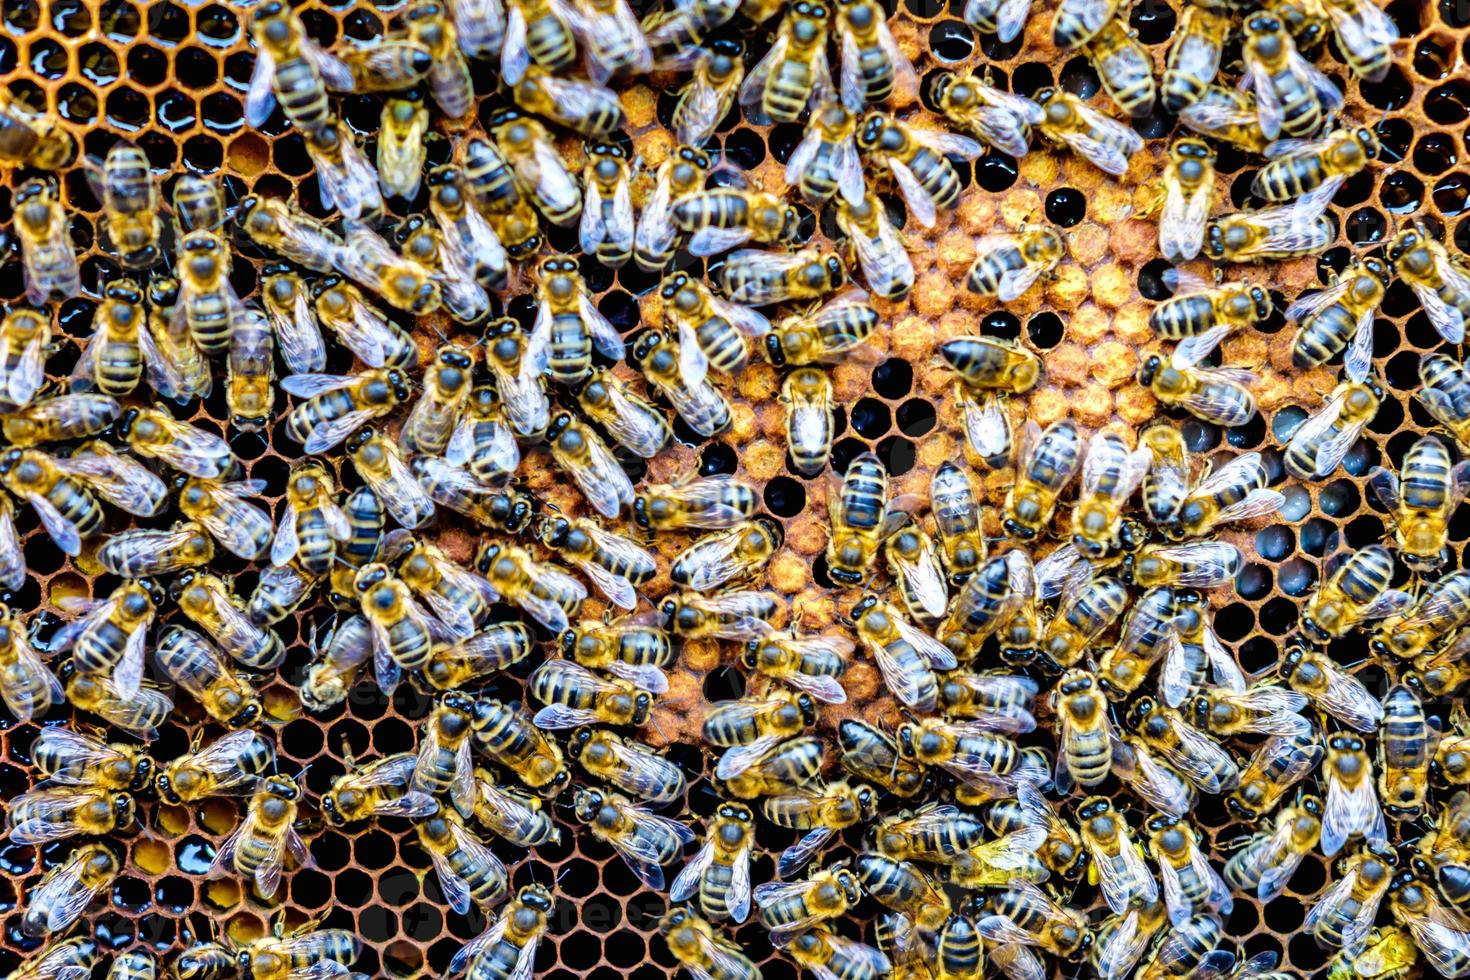 sciame di api su telai a nido d'ape in apiario foto